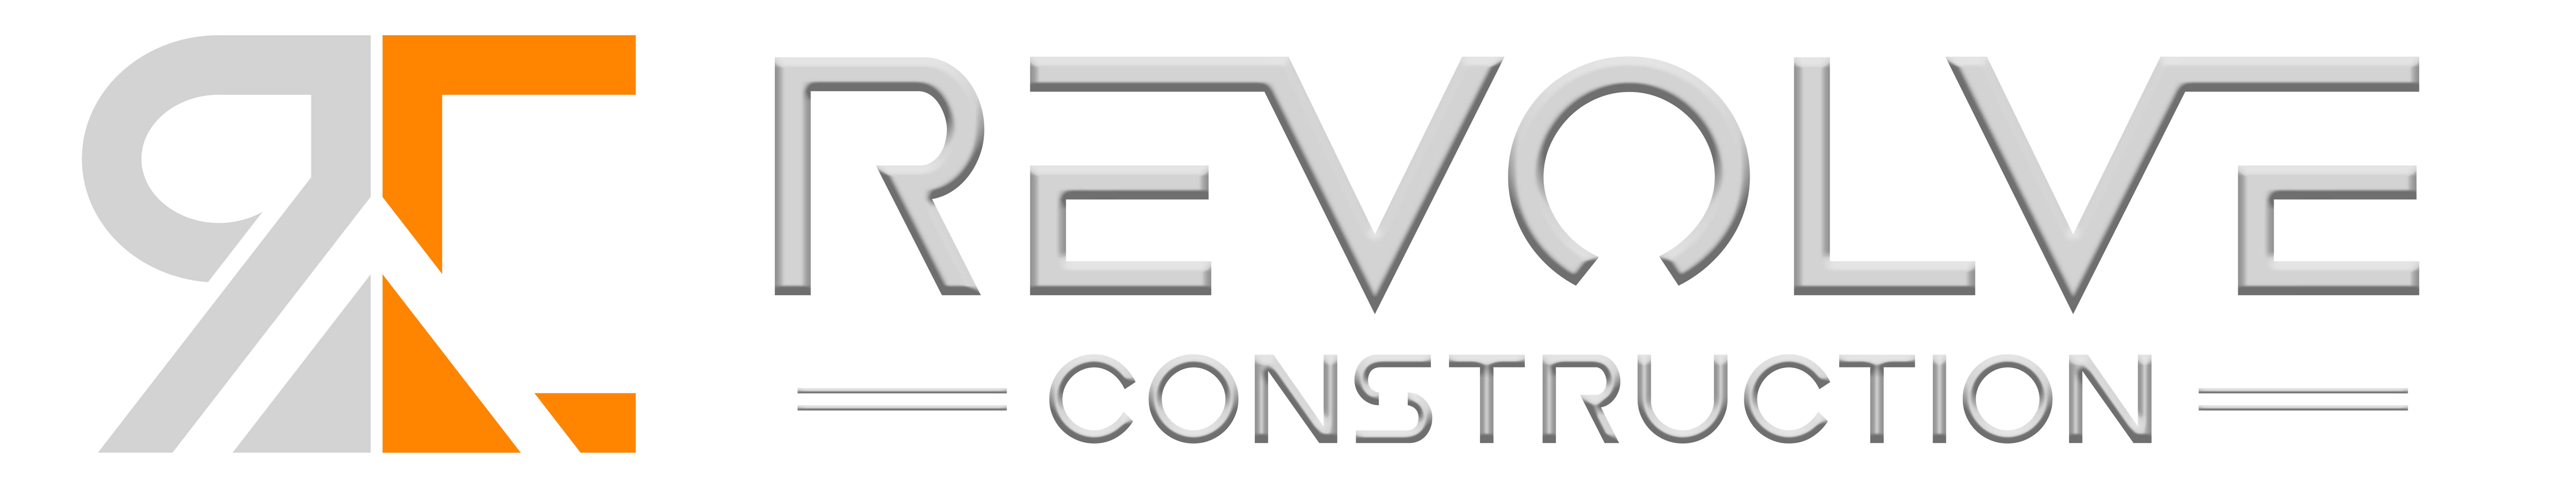 Revolve Construction